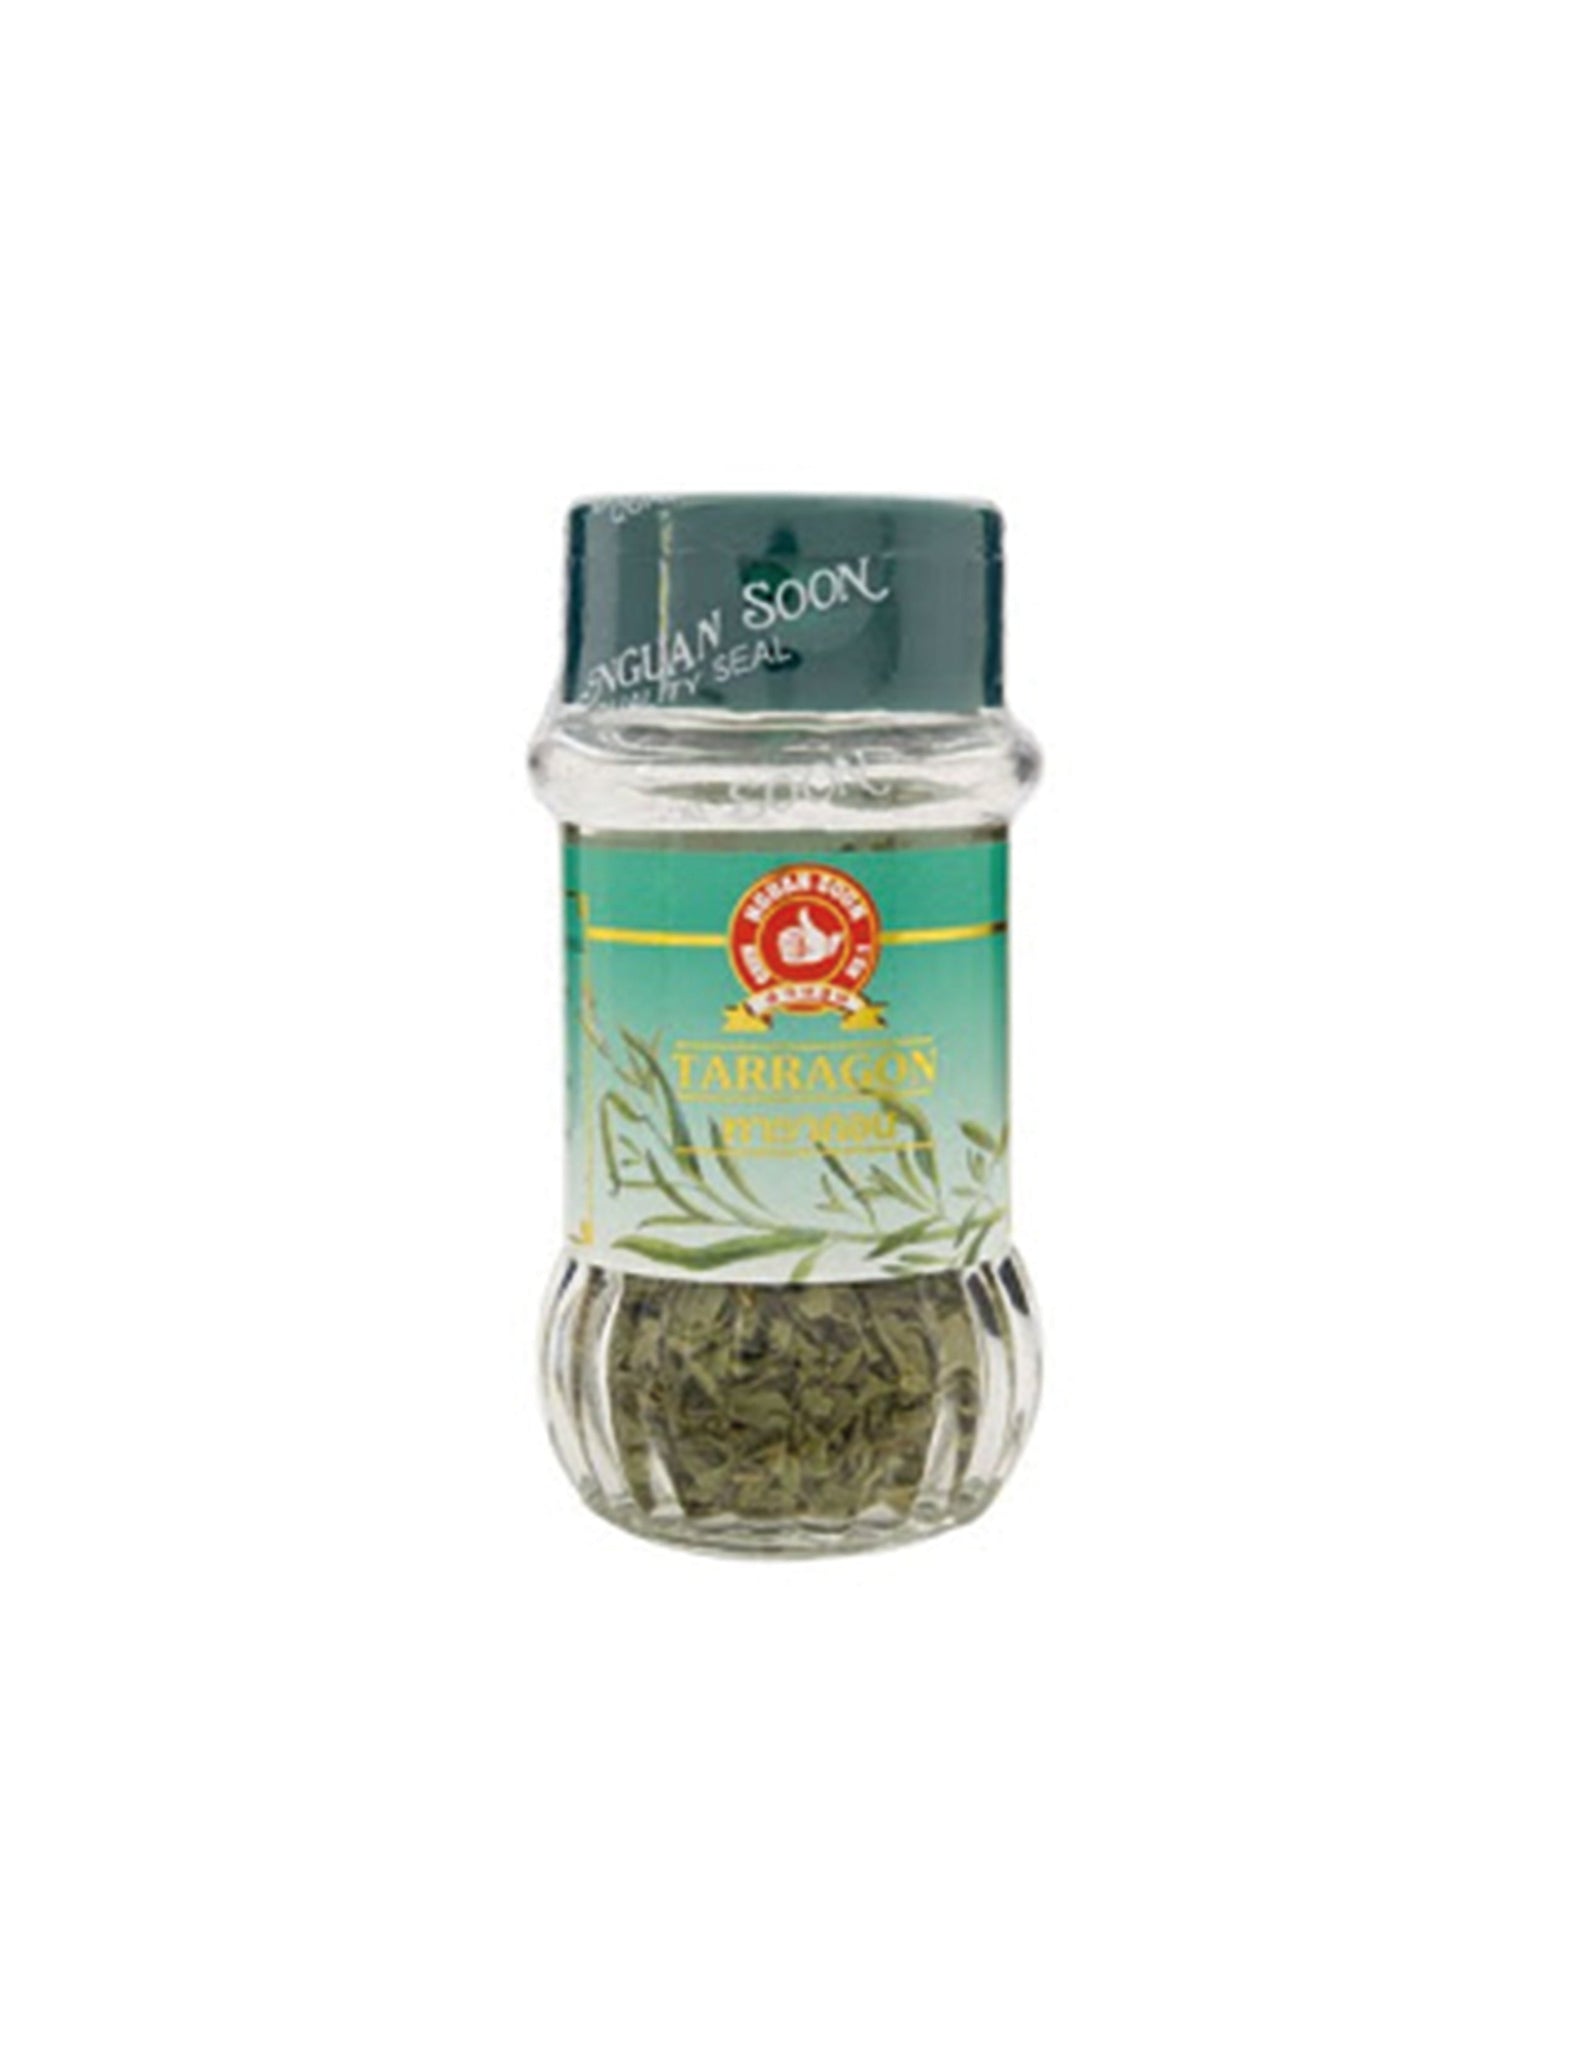 tha>Nguan Soon Taragon herbs and spices 12 grams